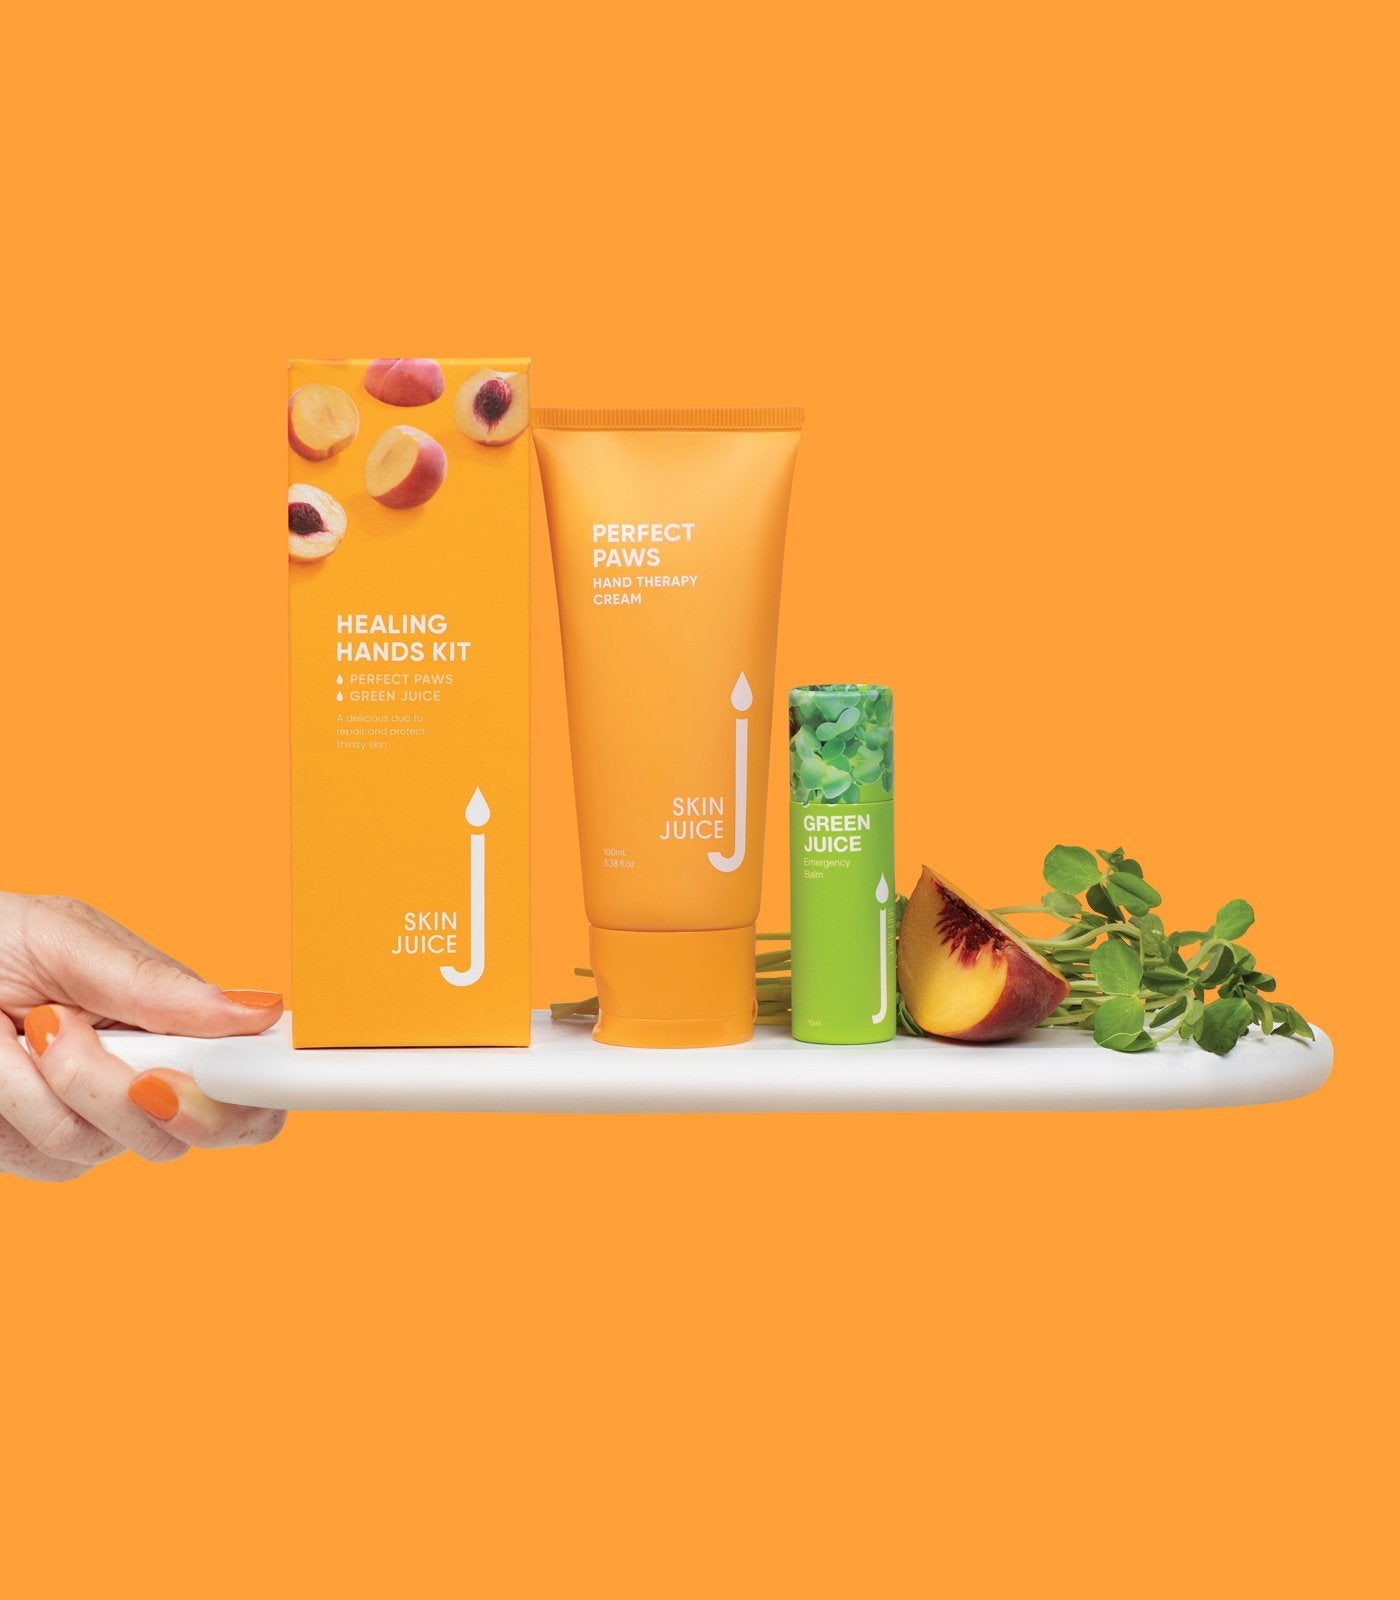 Skin Juice Healing Hands kit